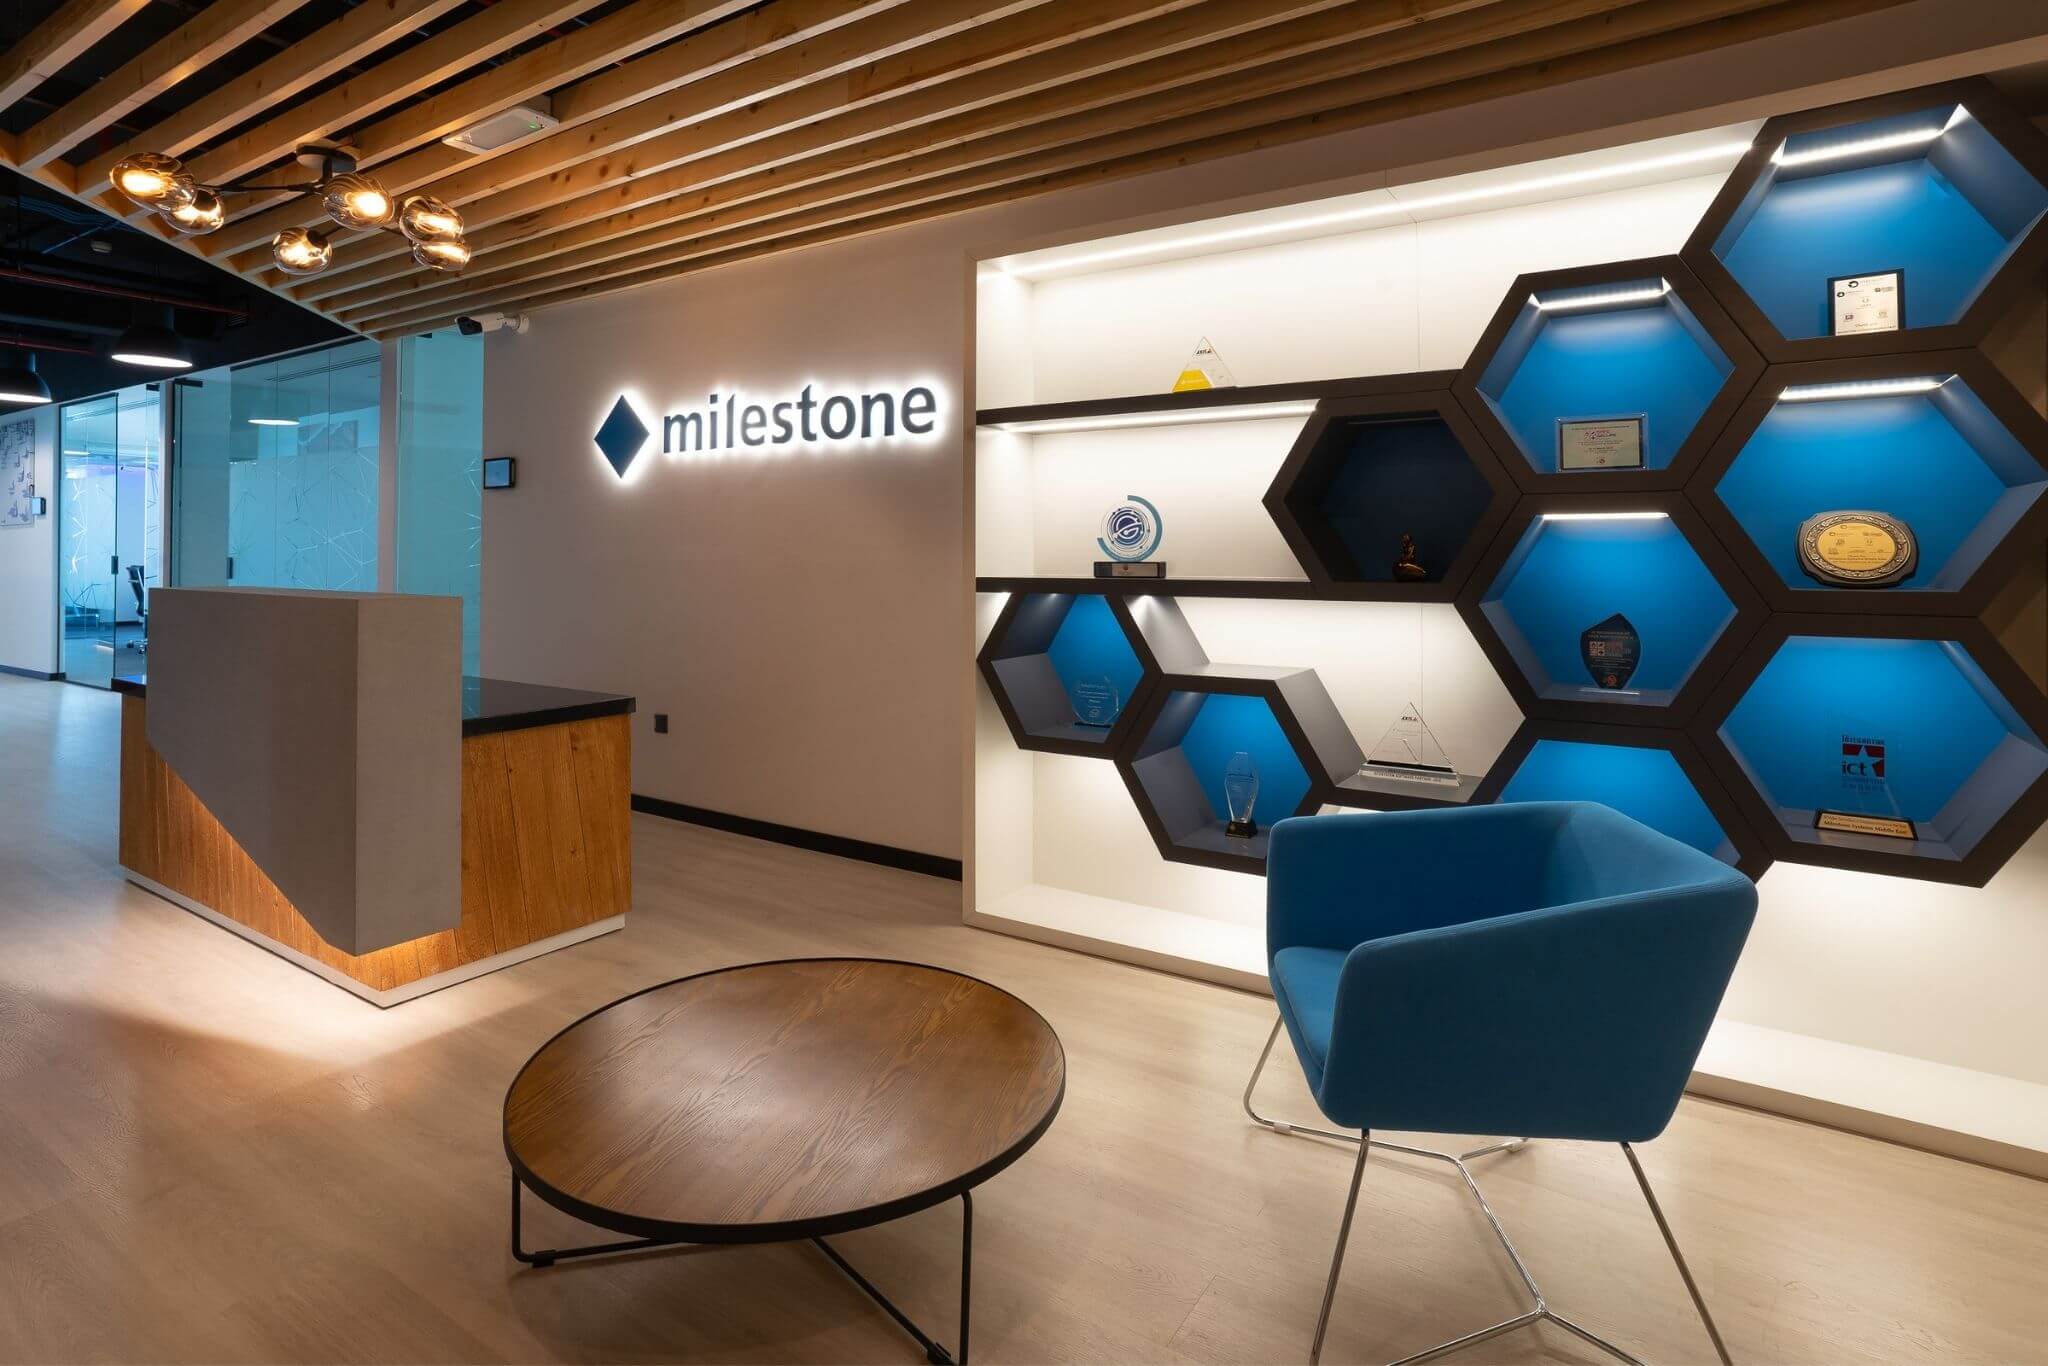 Milestone office in Dubai design and build by Motif Interiors2